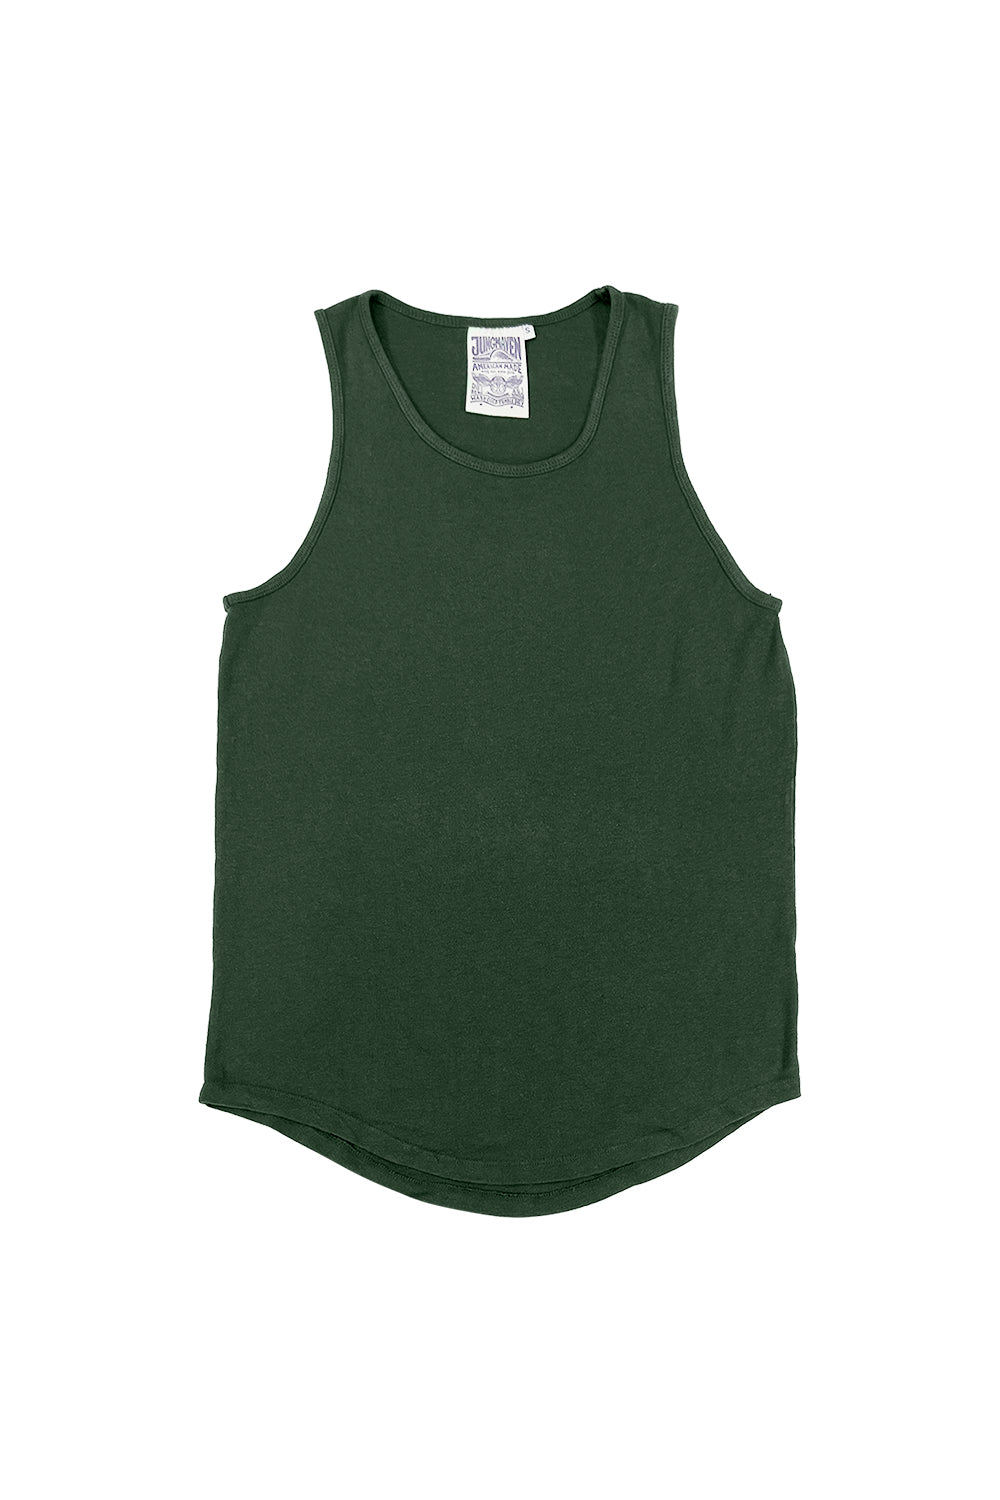 Tank Top | Jungmaven Hemp Clothing & Accessories / Color: Hunter Green